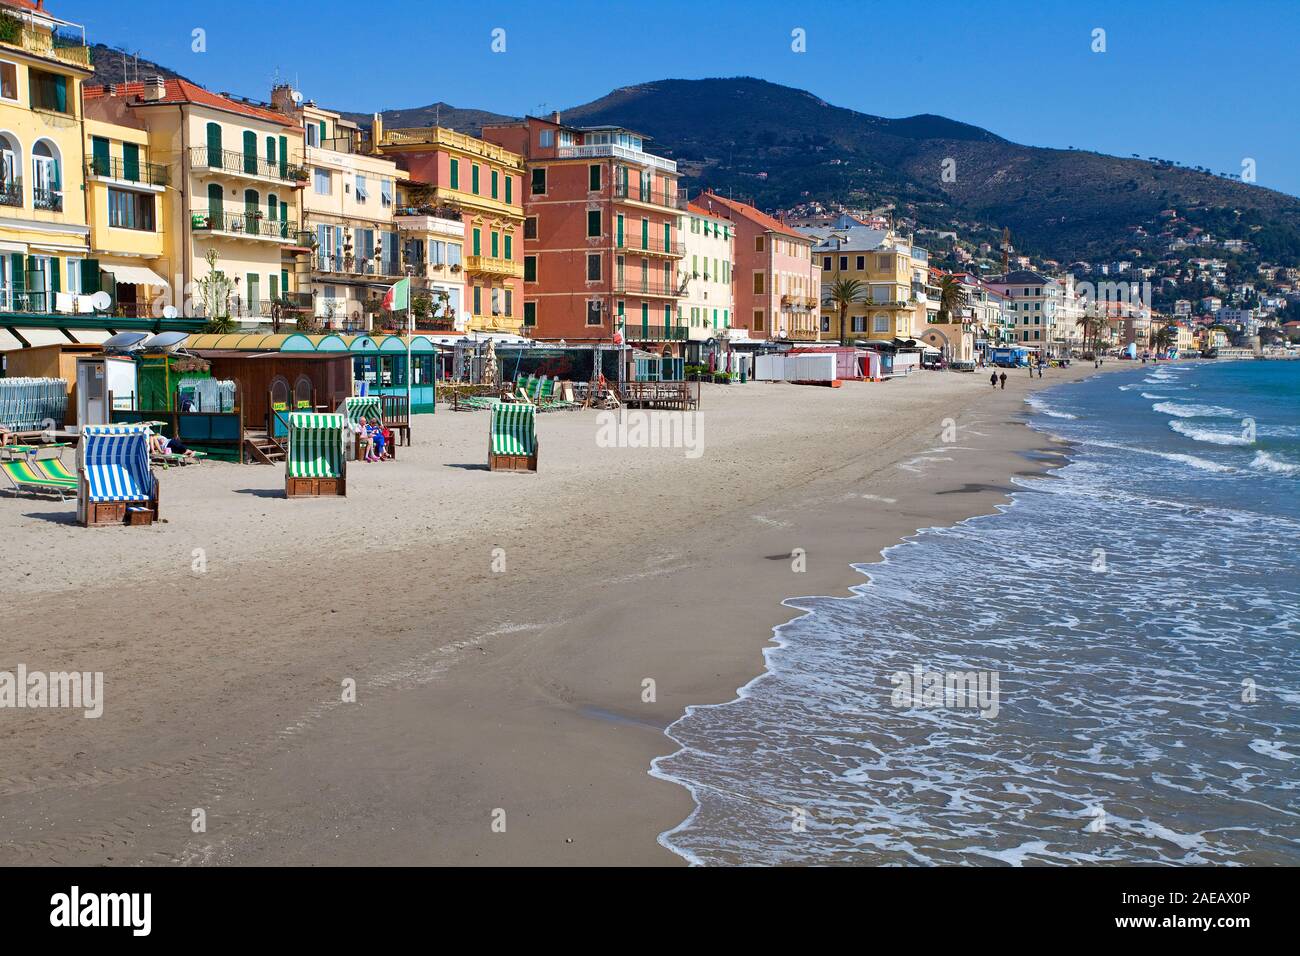 Canopied beach chairs at the bathing beach of Alassio, Riviera di Ponente, Liguria, Italy Stock Photo